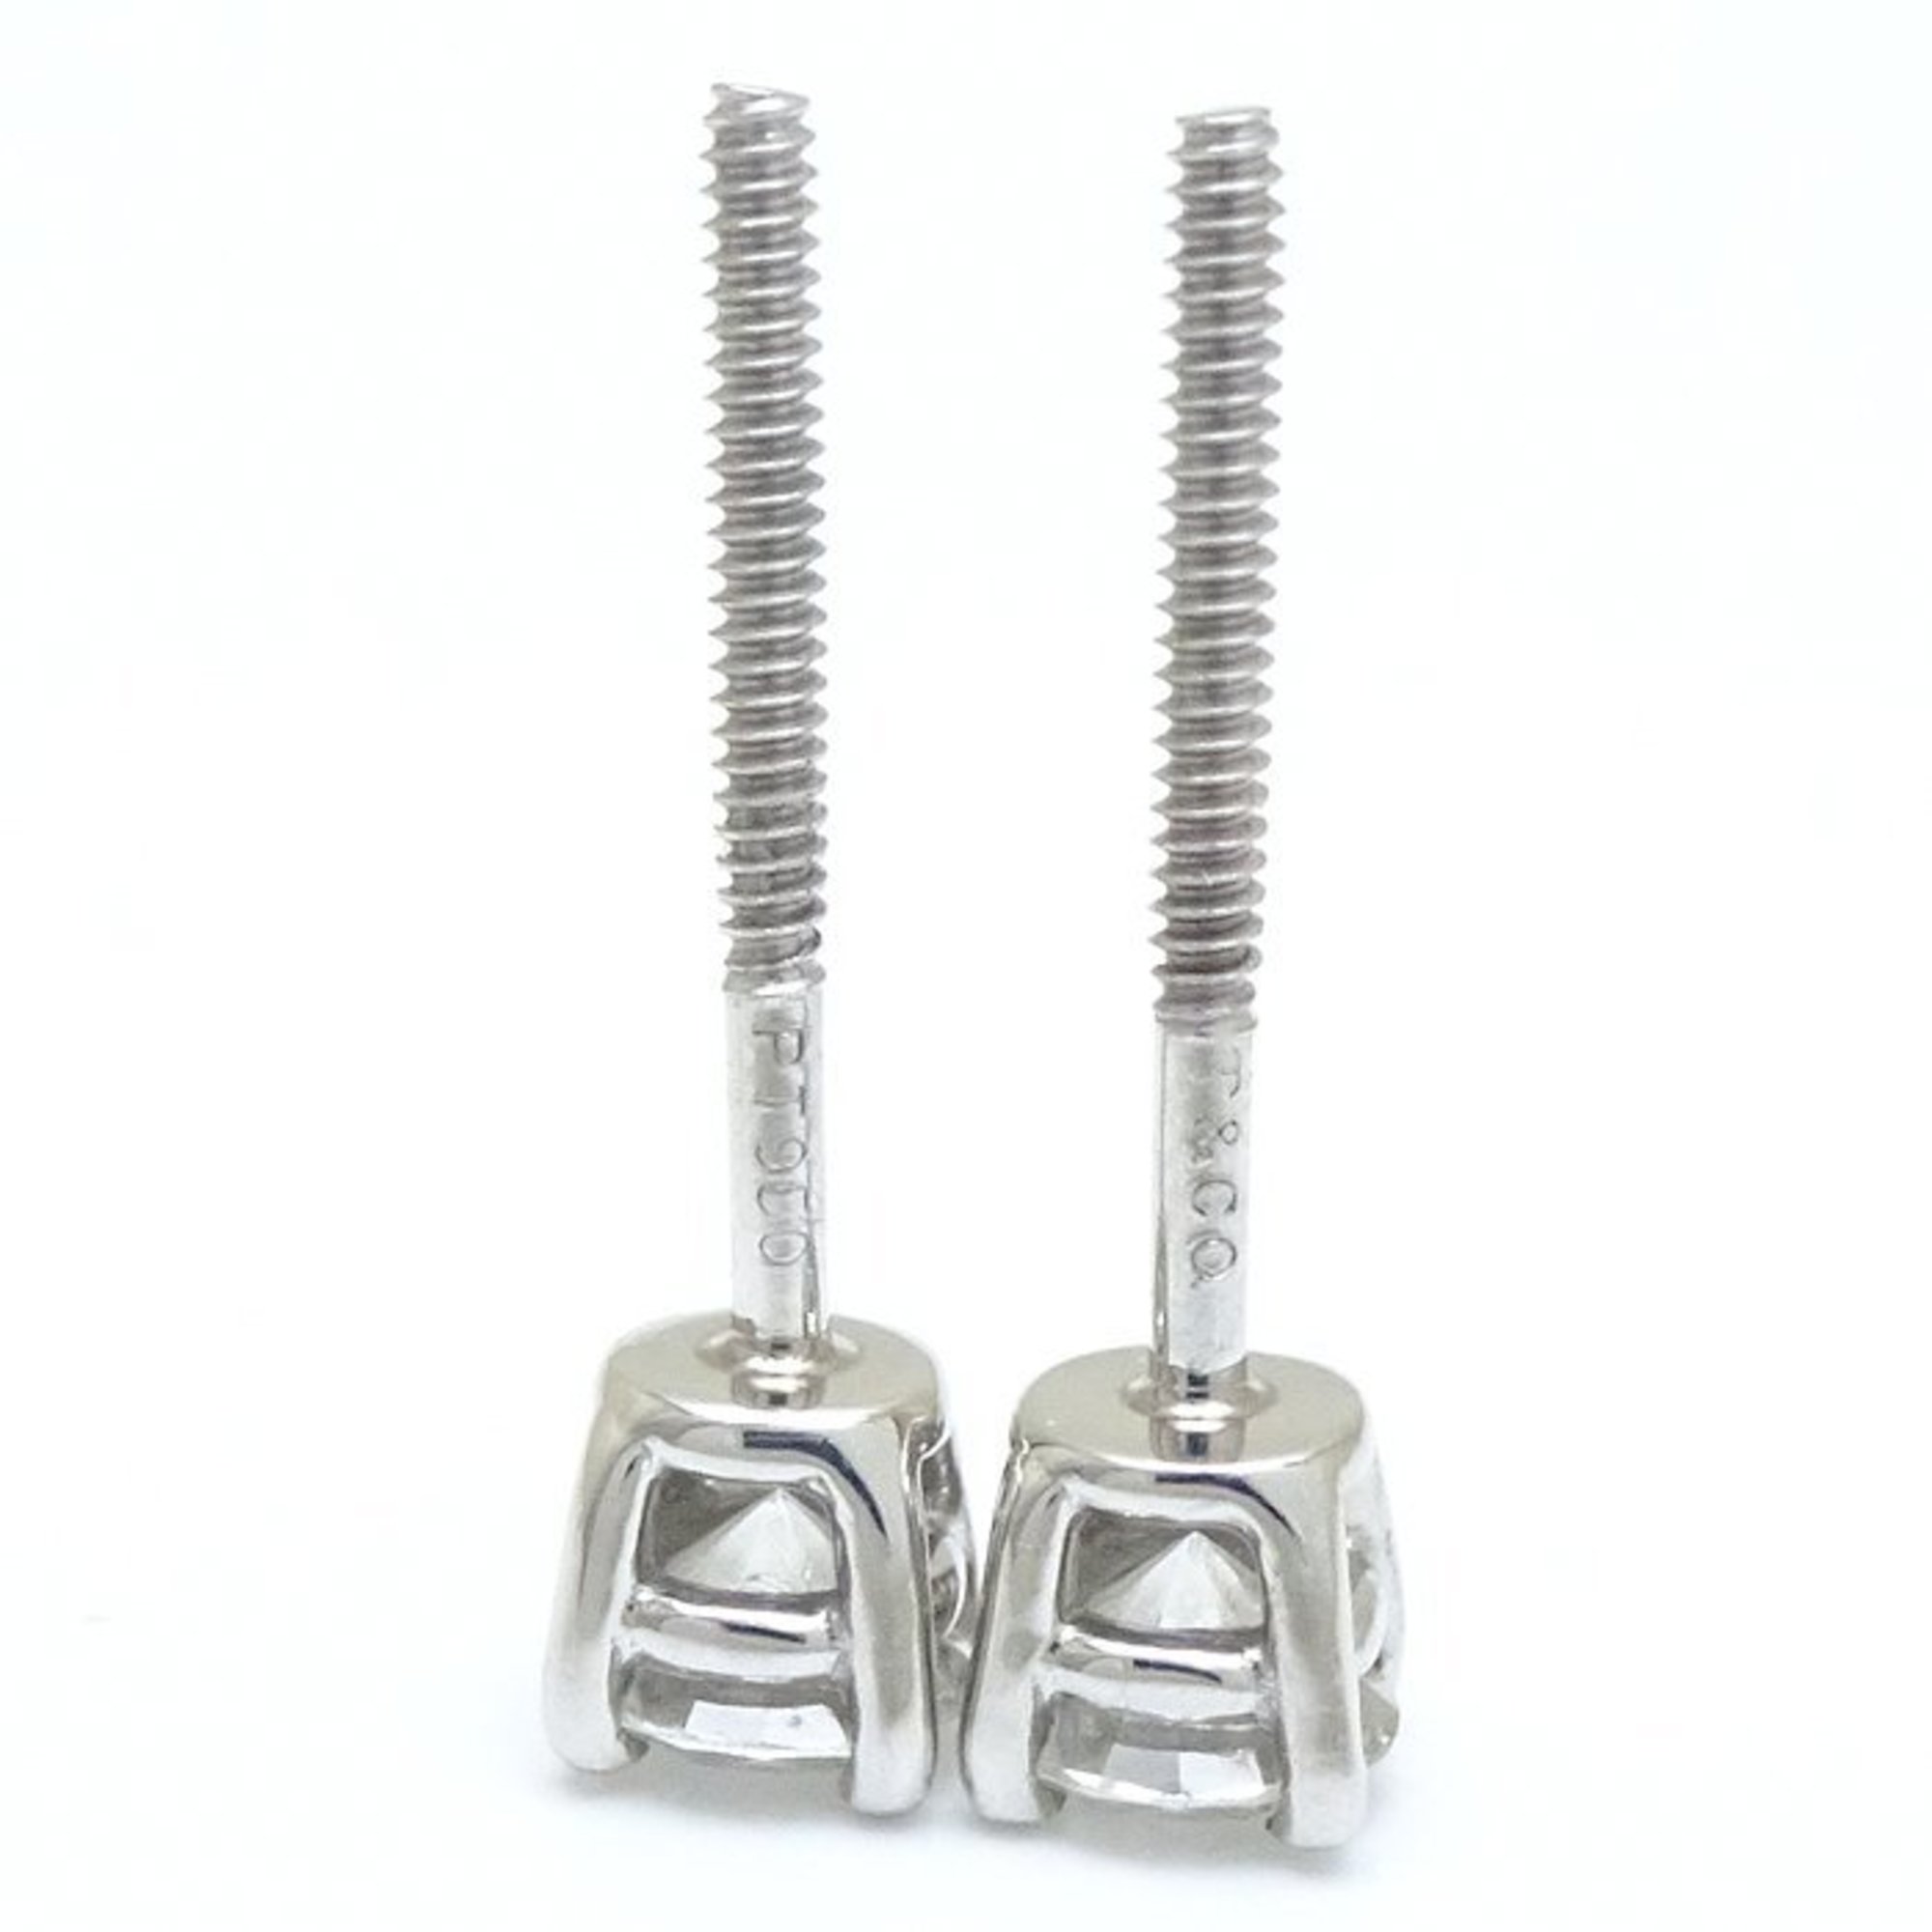 TIFFANY&Co. Tiffany Solitaire Earrings Single Diamond Pt950 Platinum 291154